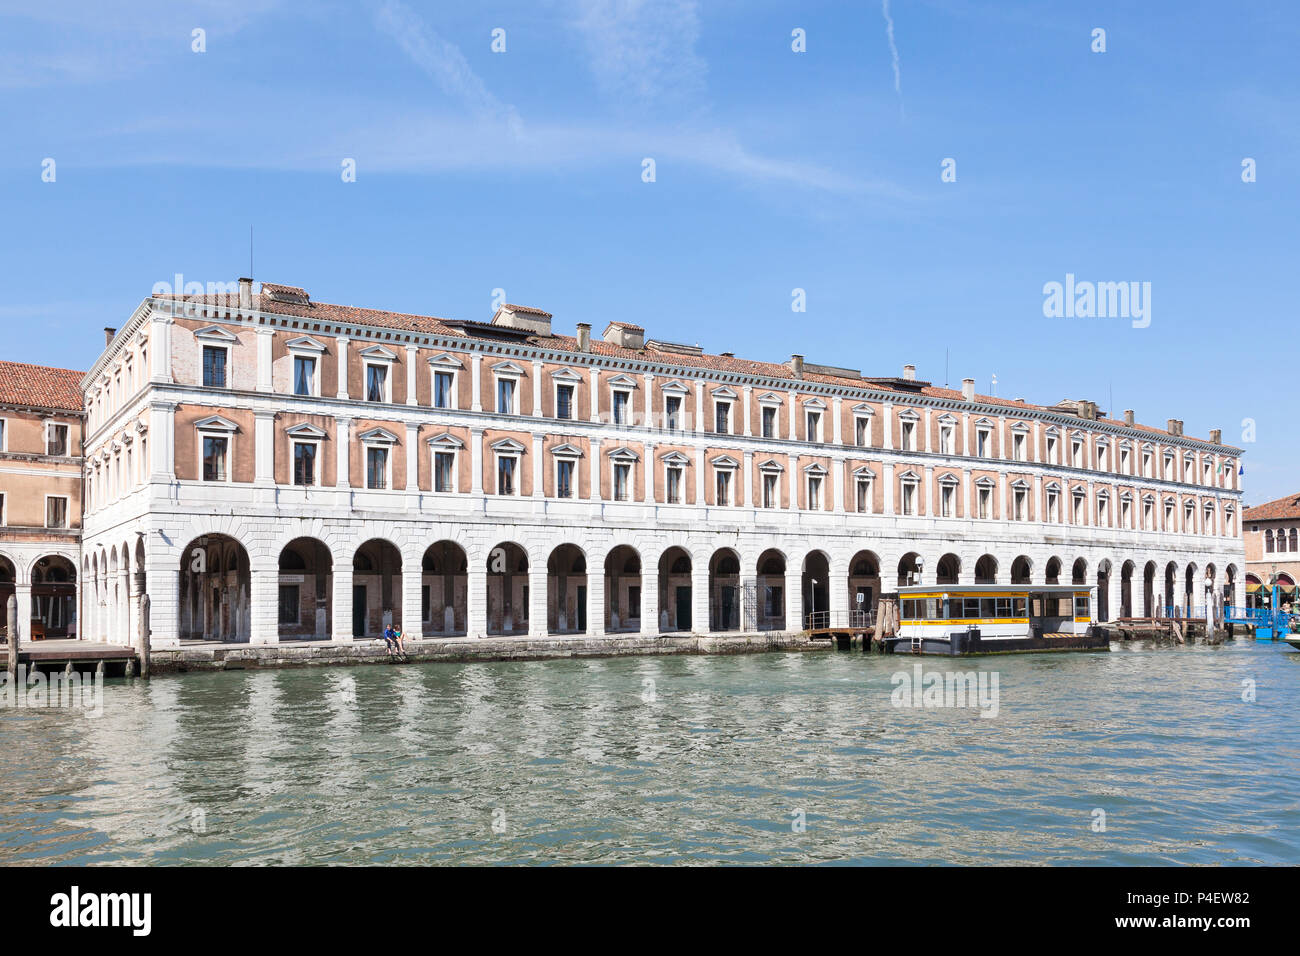 Fabbriche Nuove, Grand Canal, Rialto Mercato, San Polo, Venice, Veneto, Italy dating from 1554  by Jacopo Sansovino. Renaissance architecture. Stock Photo